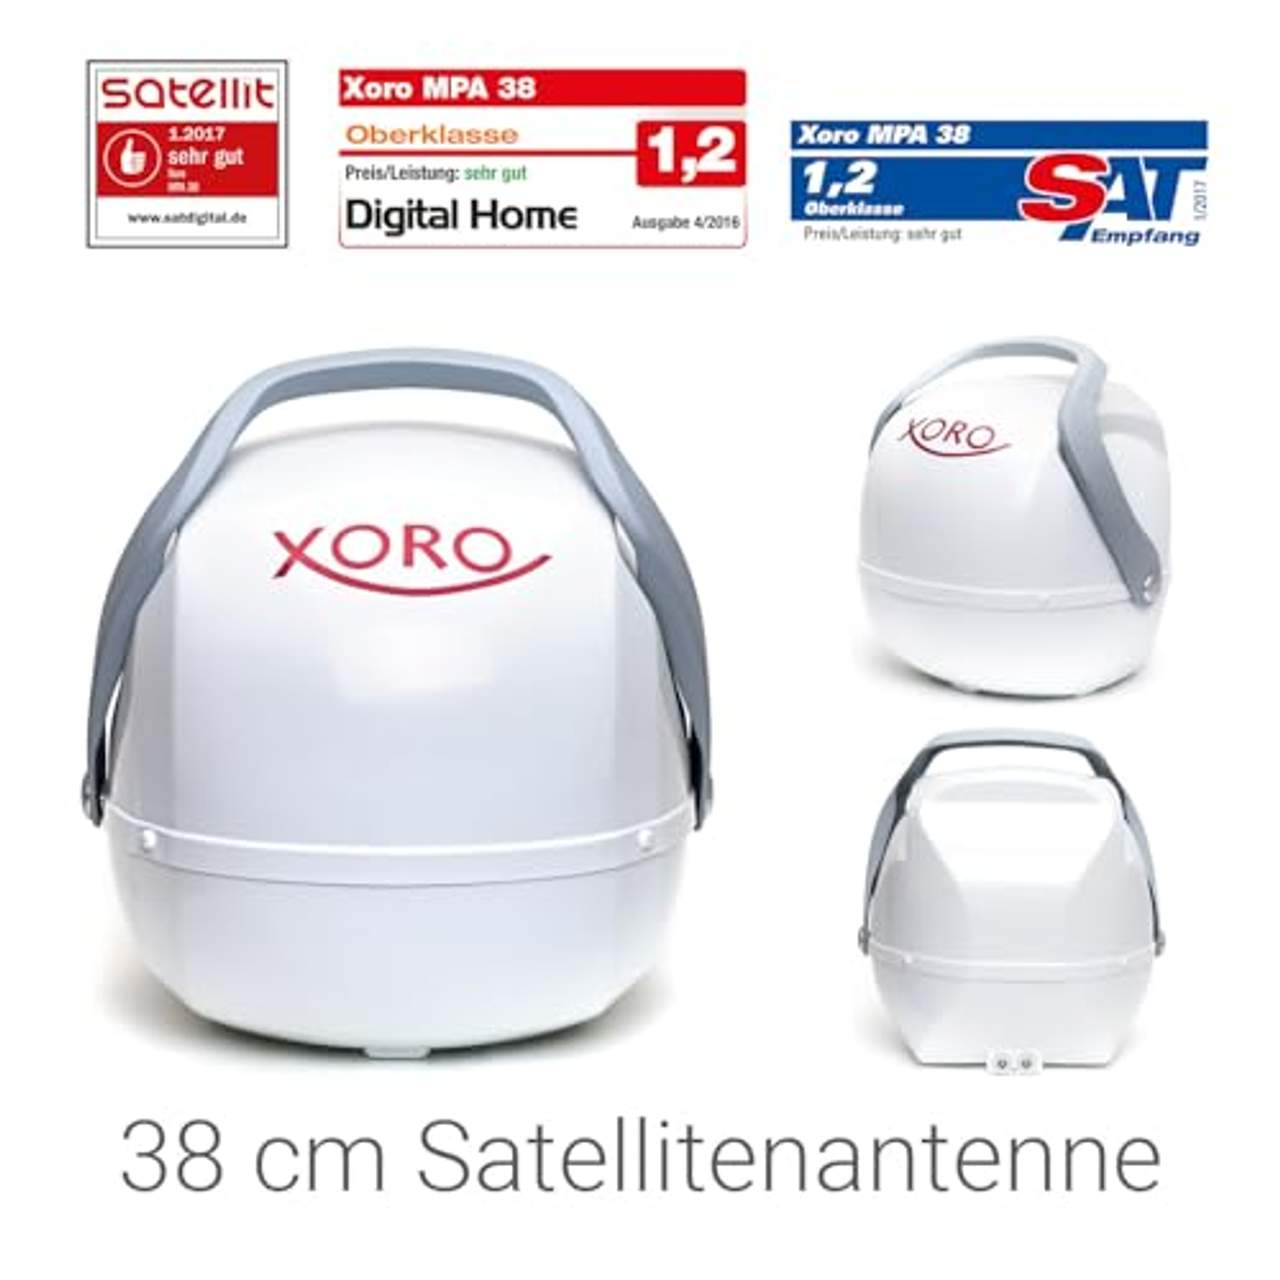 Xoro MPA 38 Vollautomatische Mobile Satelliten-Antenne